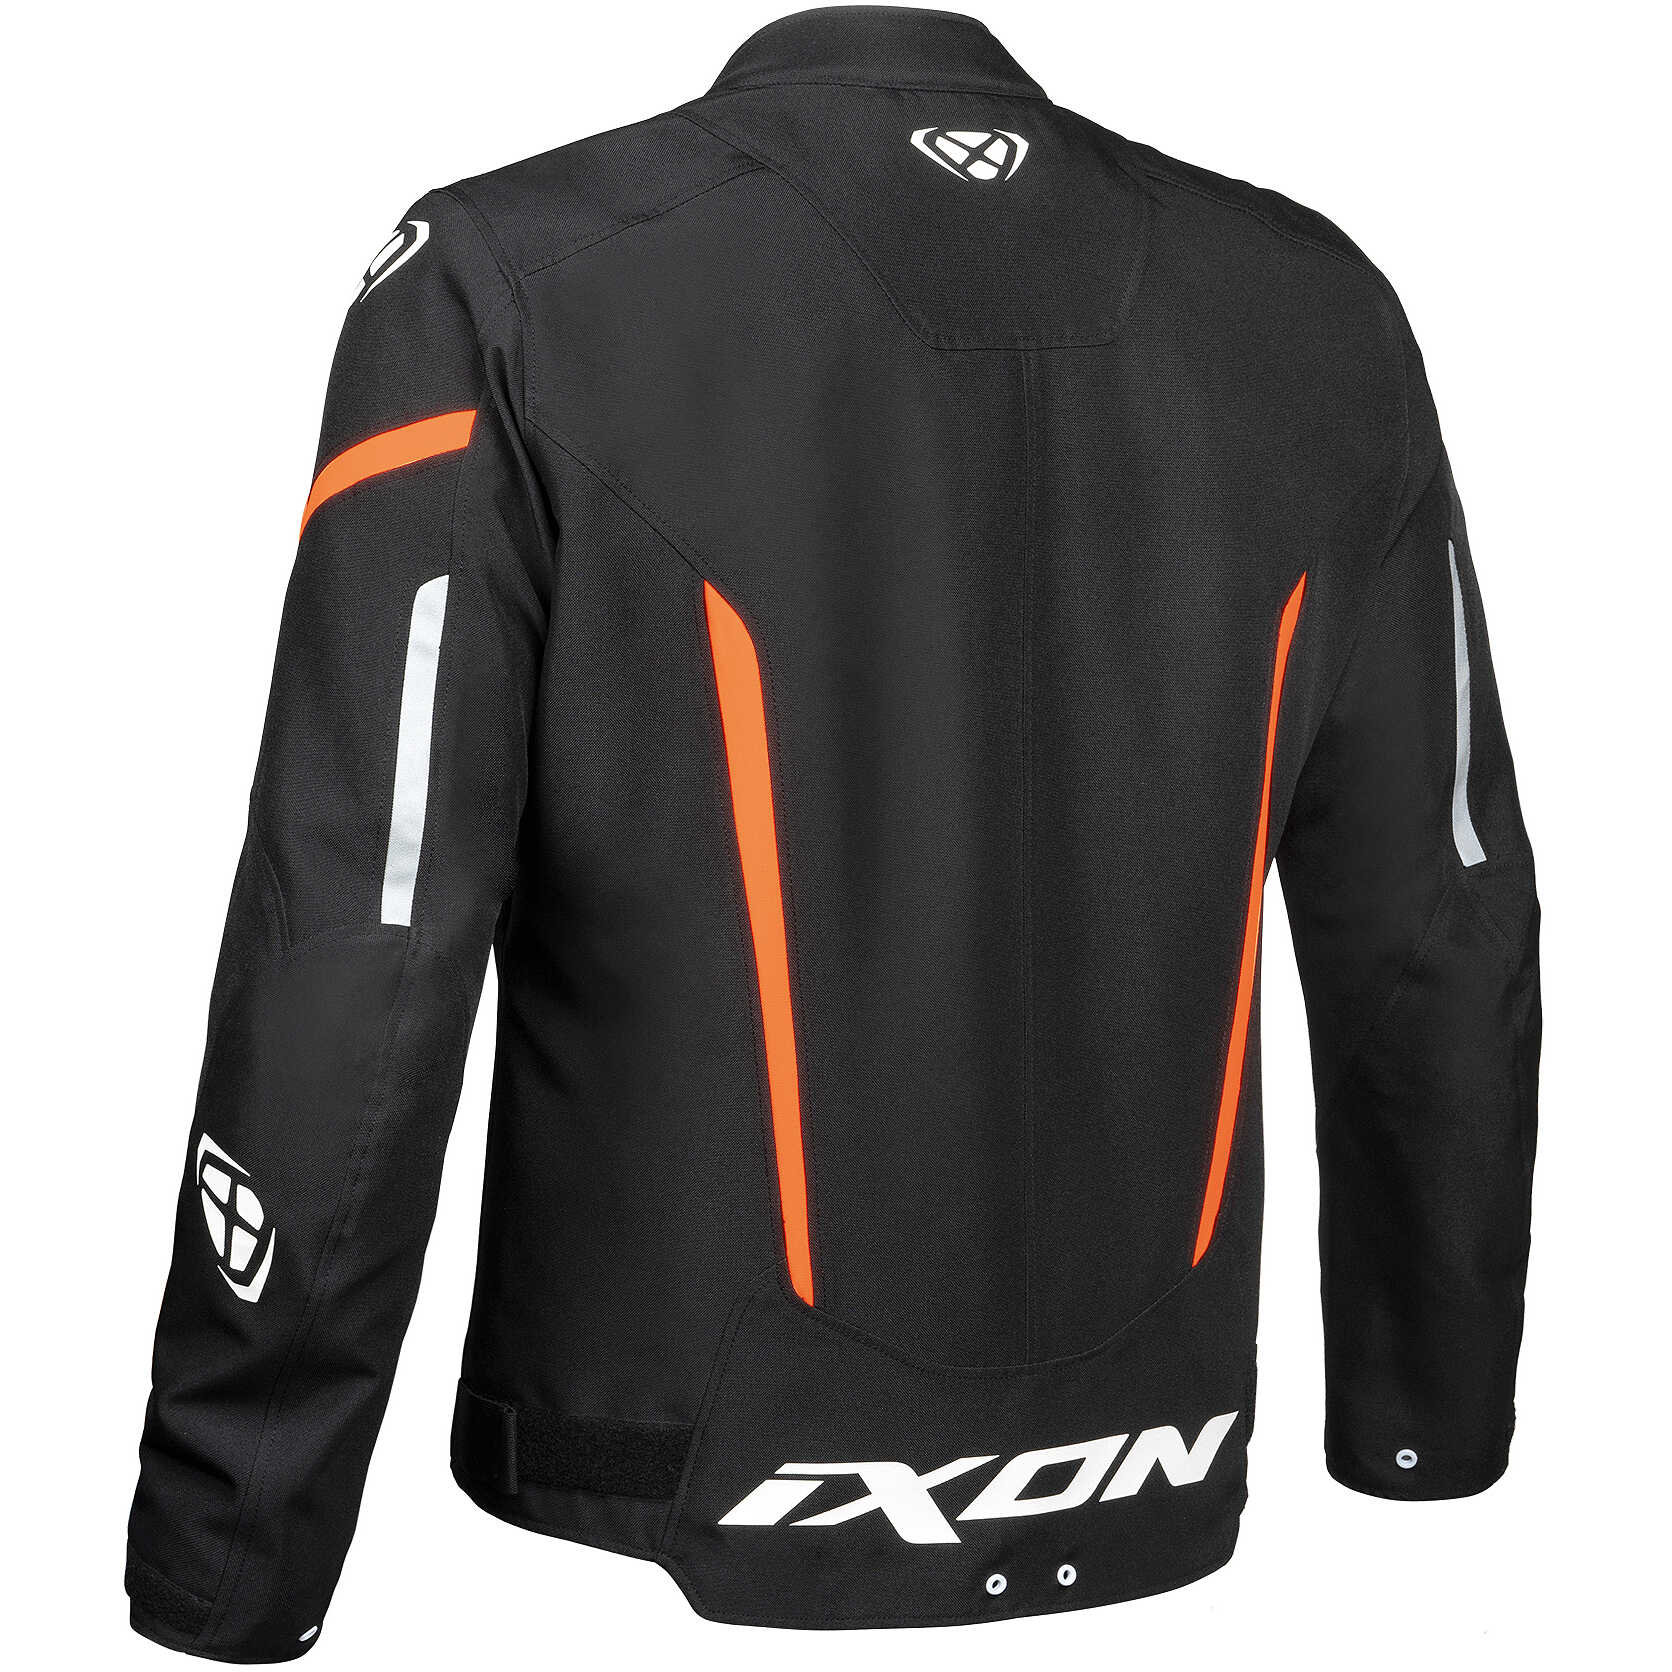 Ixon STRIKER Motorcycle Jacket Black White Orange For Sale Online 